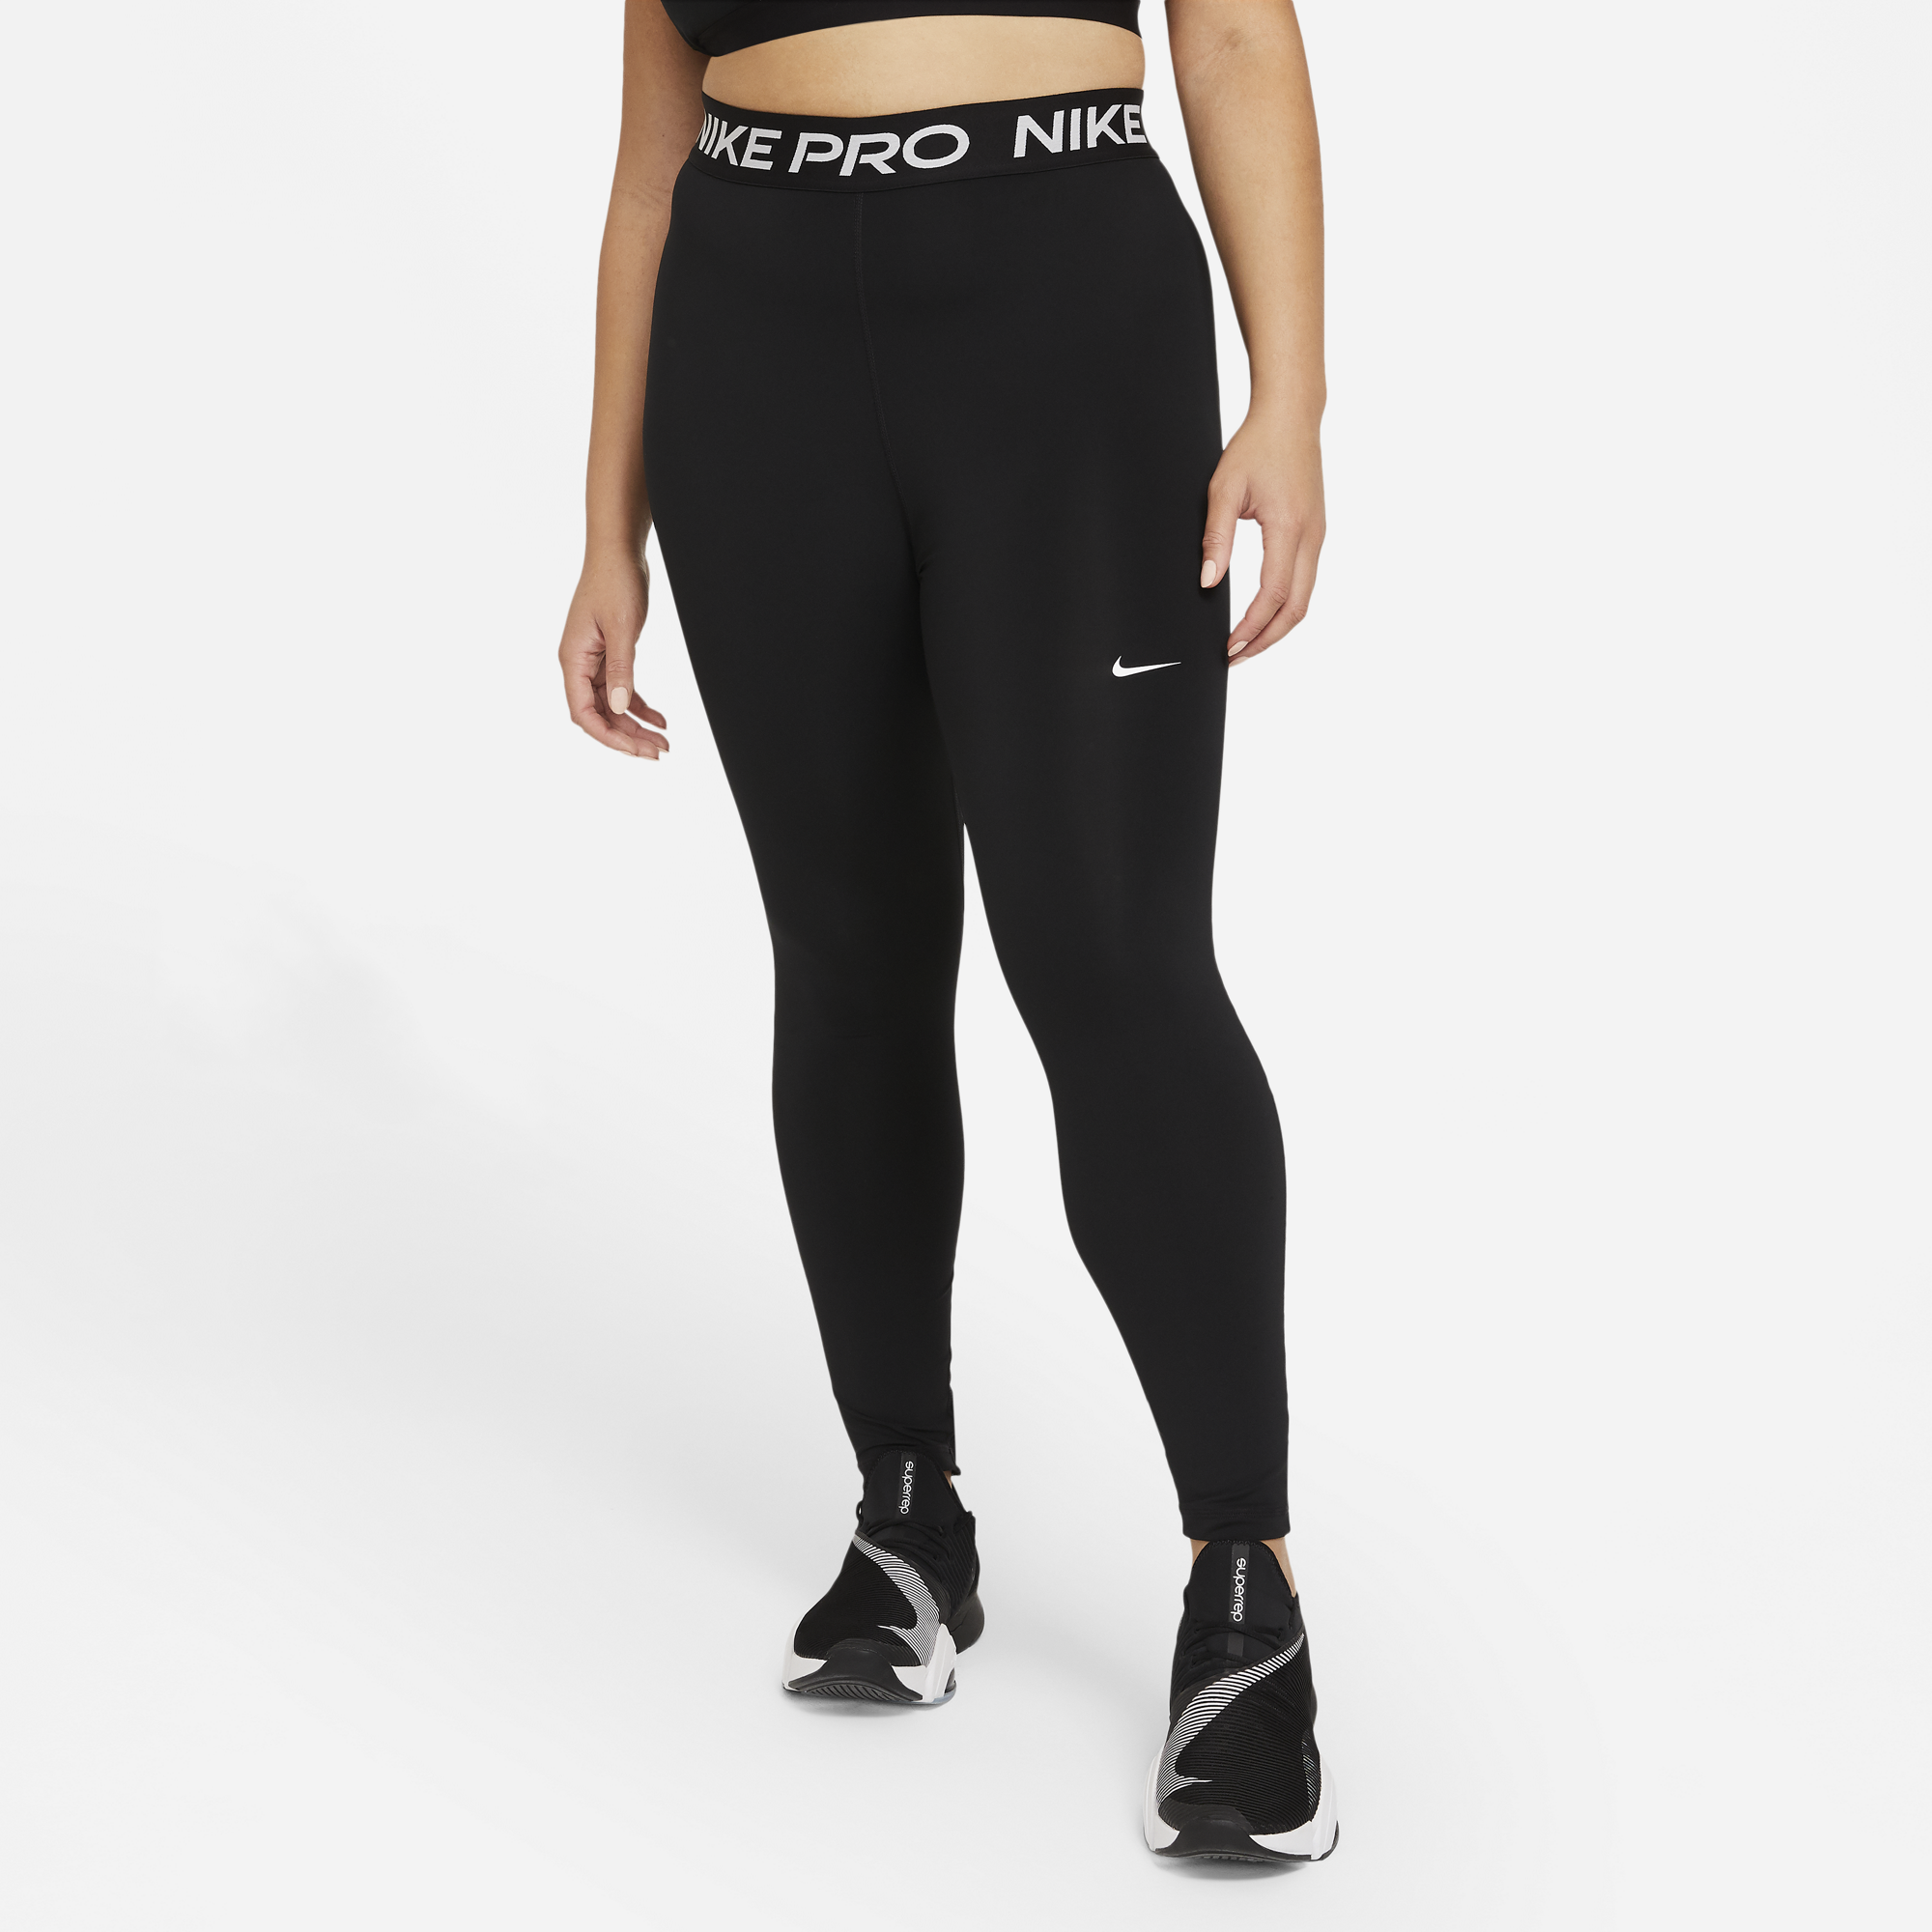 Nike Plus Pro 365 Tights - Women's